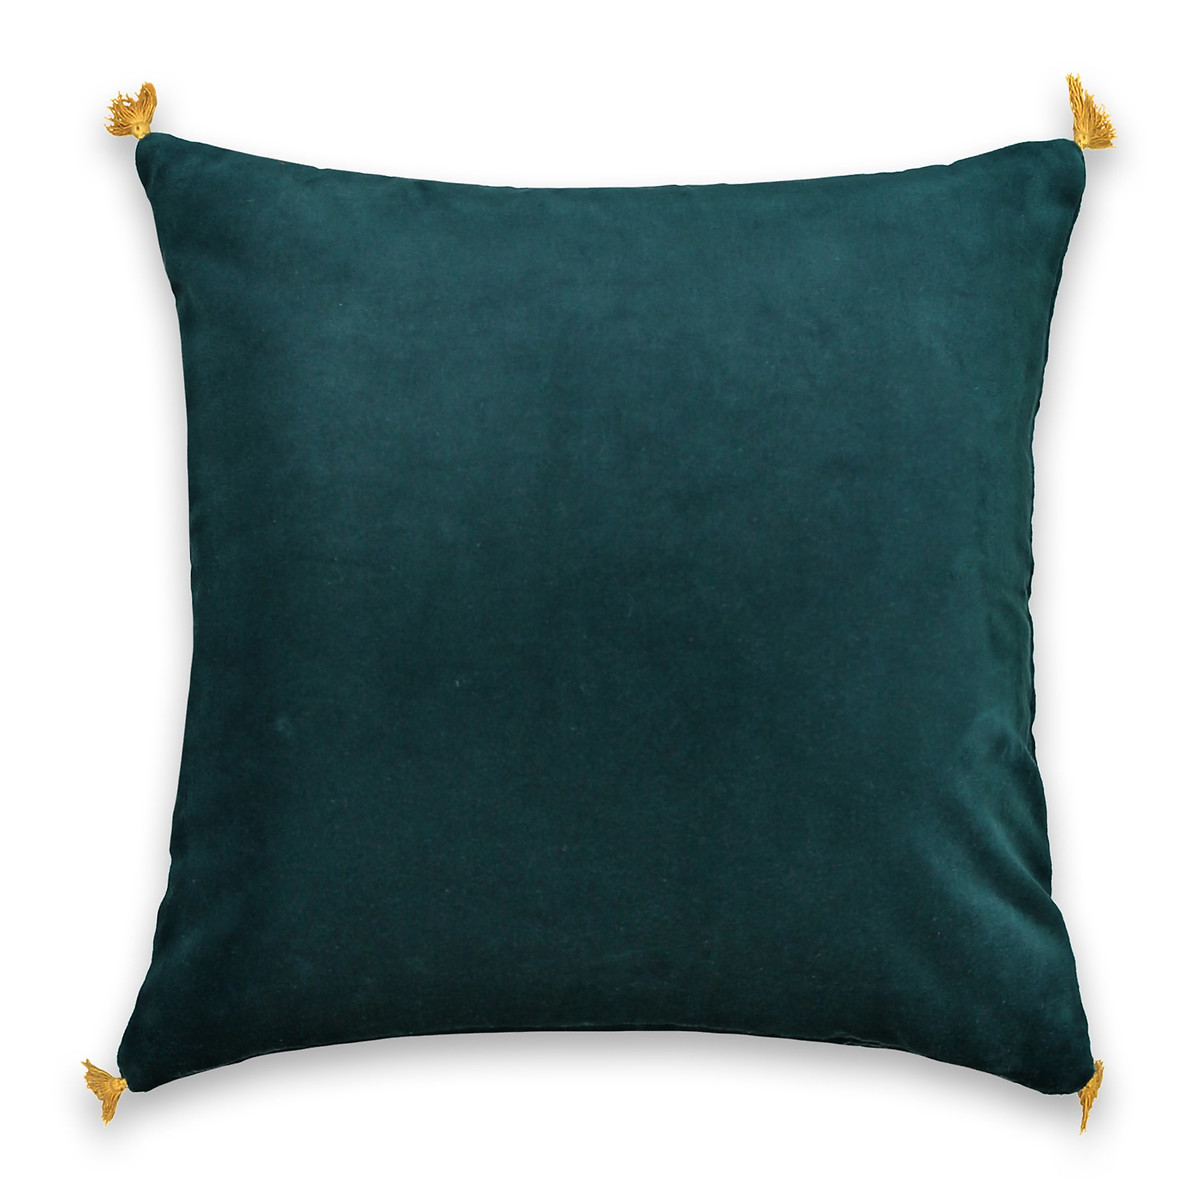 Чехол LaRedoute На подушку из велюра Paula 40 x 40 см зеленый, размер 40 x 40 см - фото 1